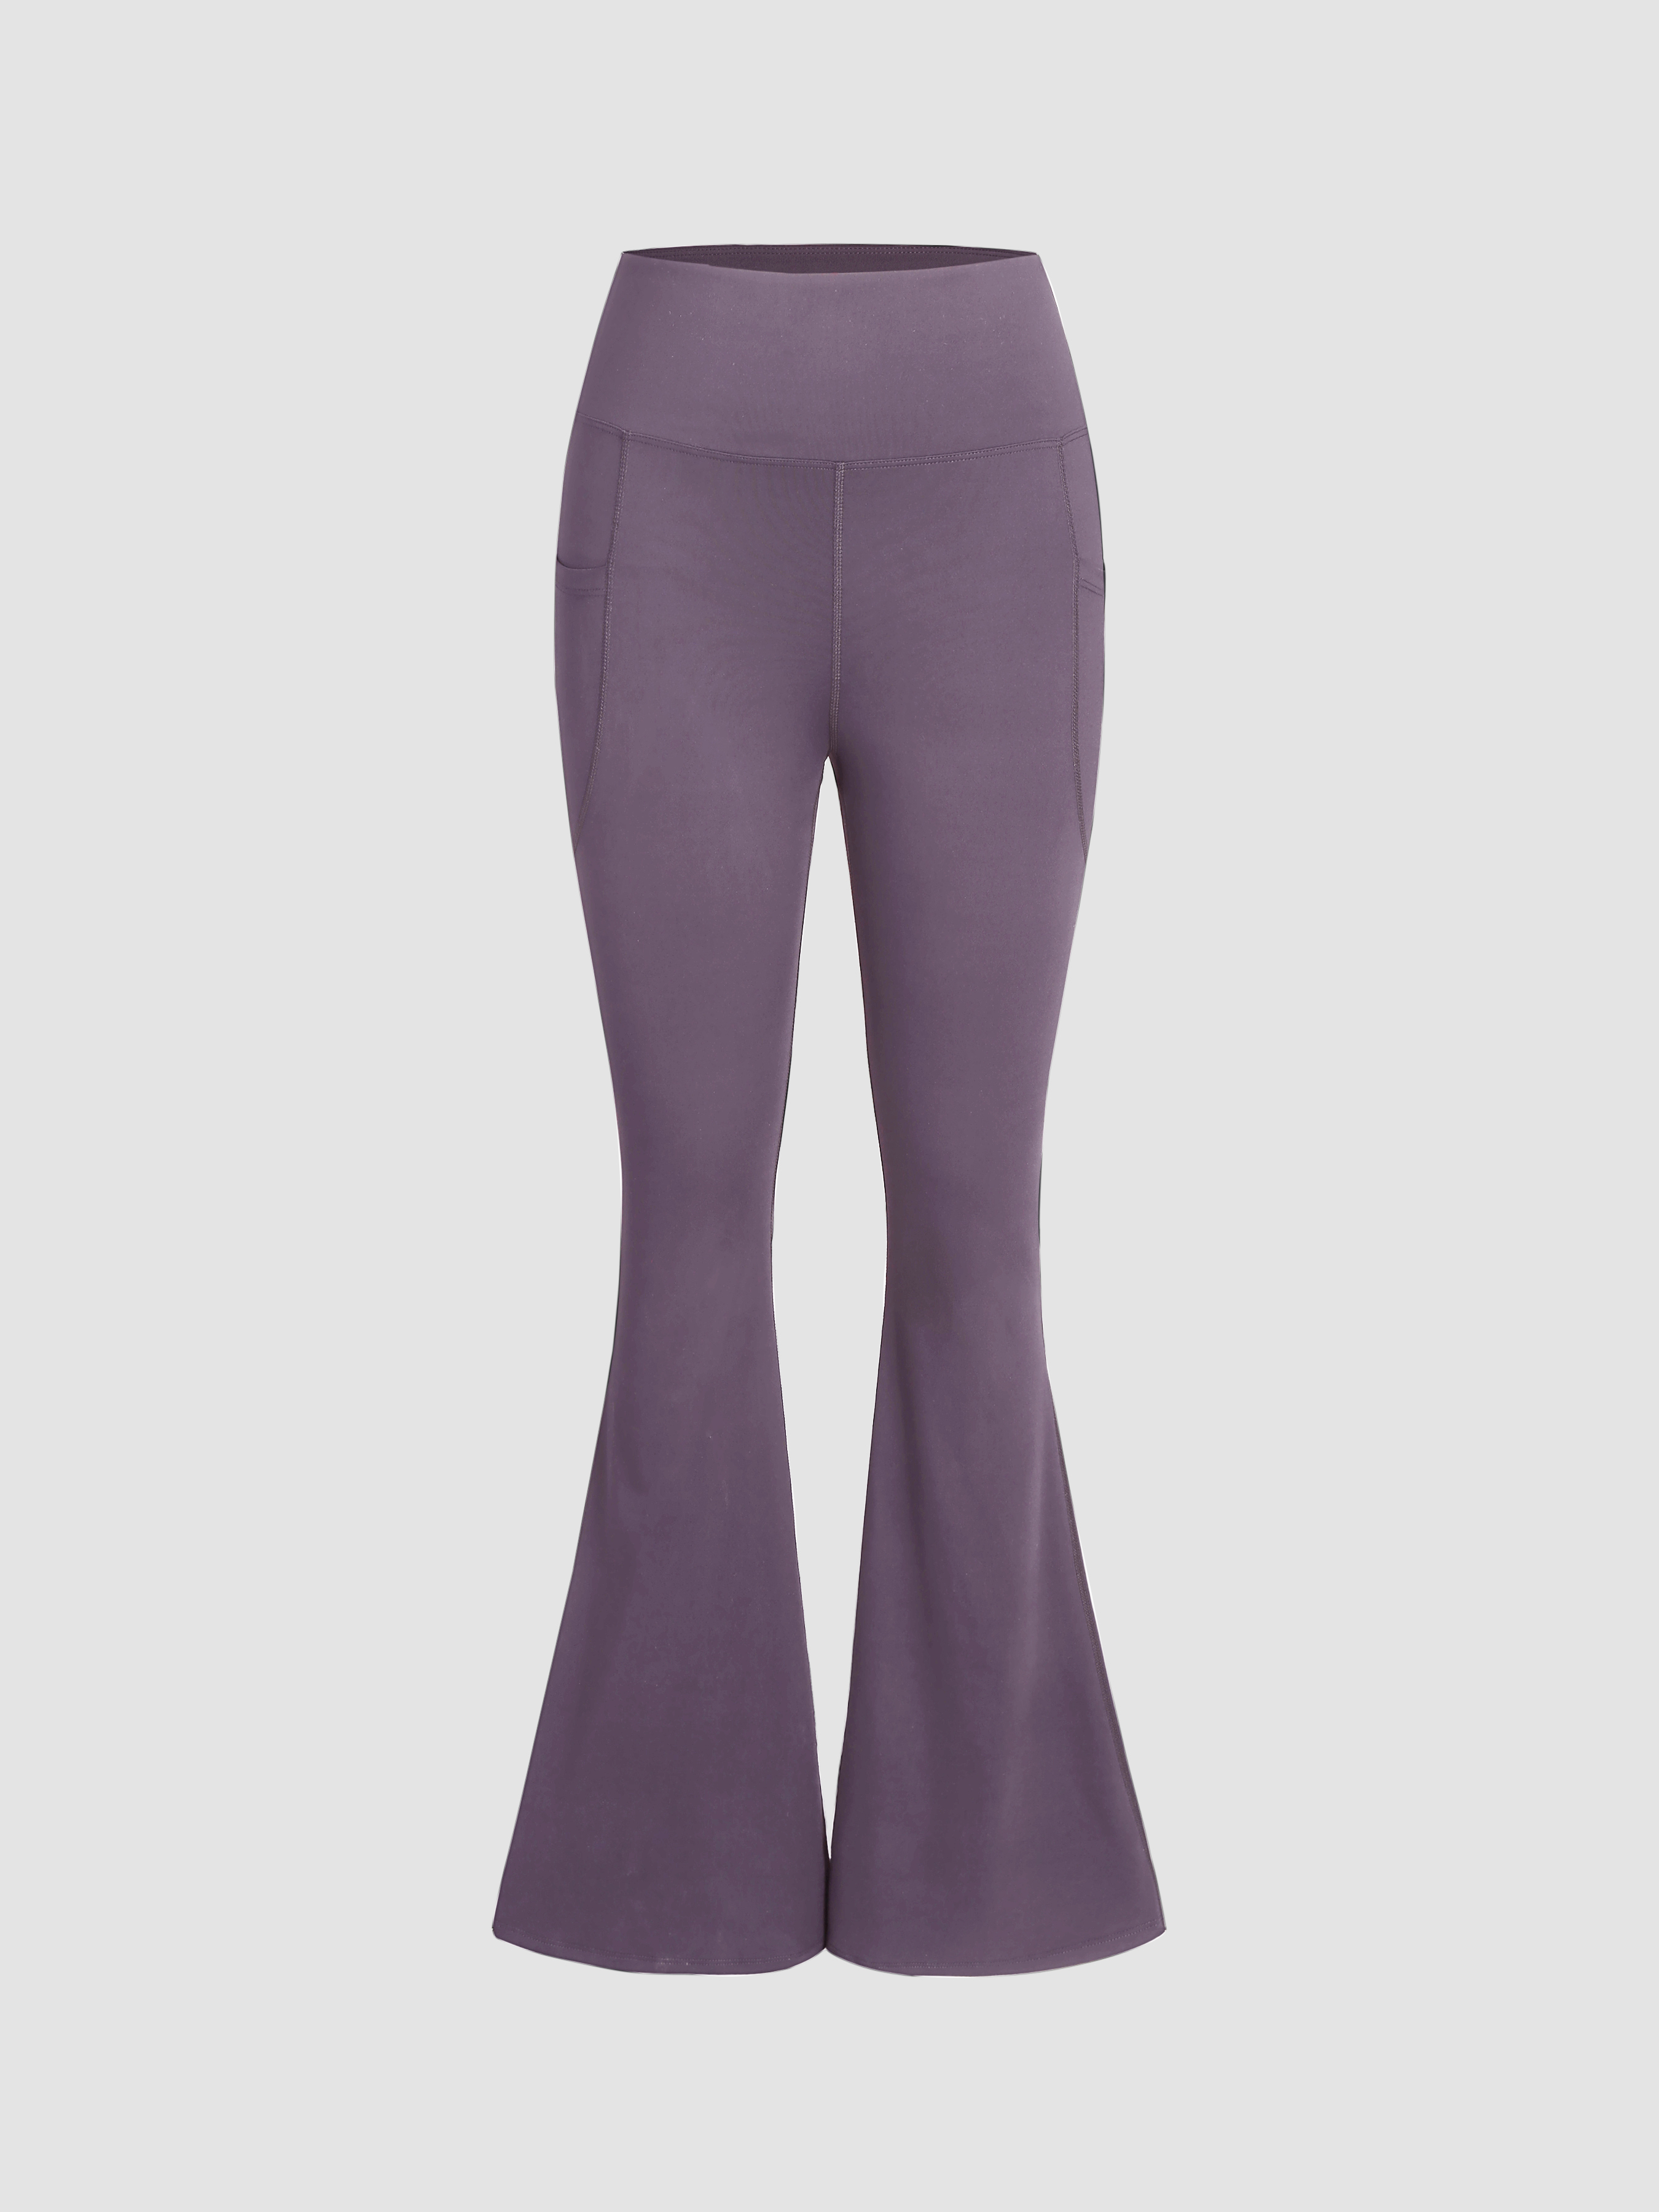 Clovia Women's Comfort-Fit High Waist Flared Yoga Pants (AB0090A13_Black_S)  : : Fashion